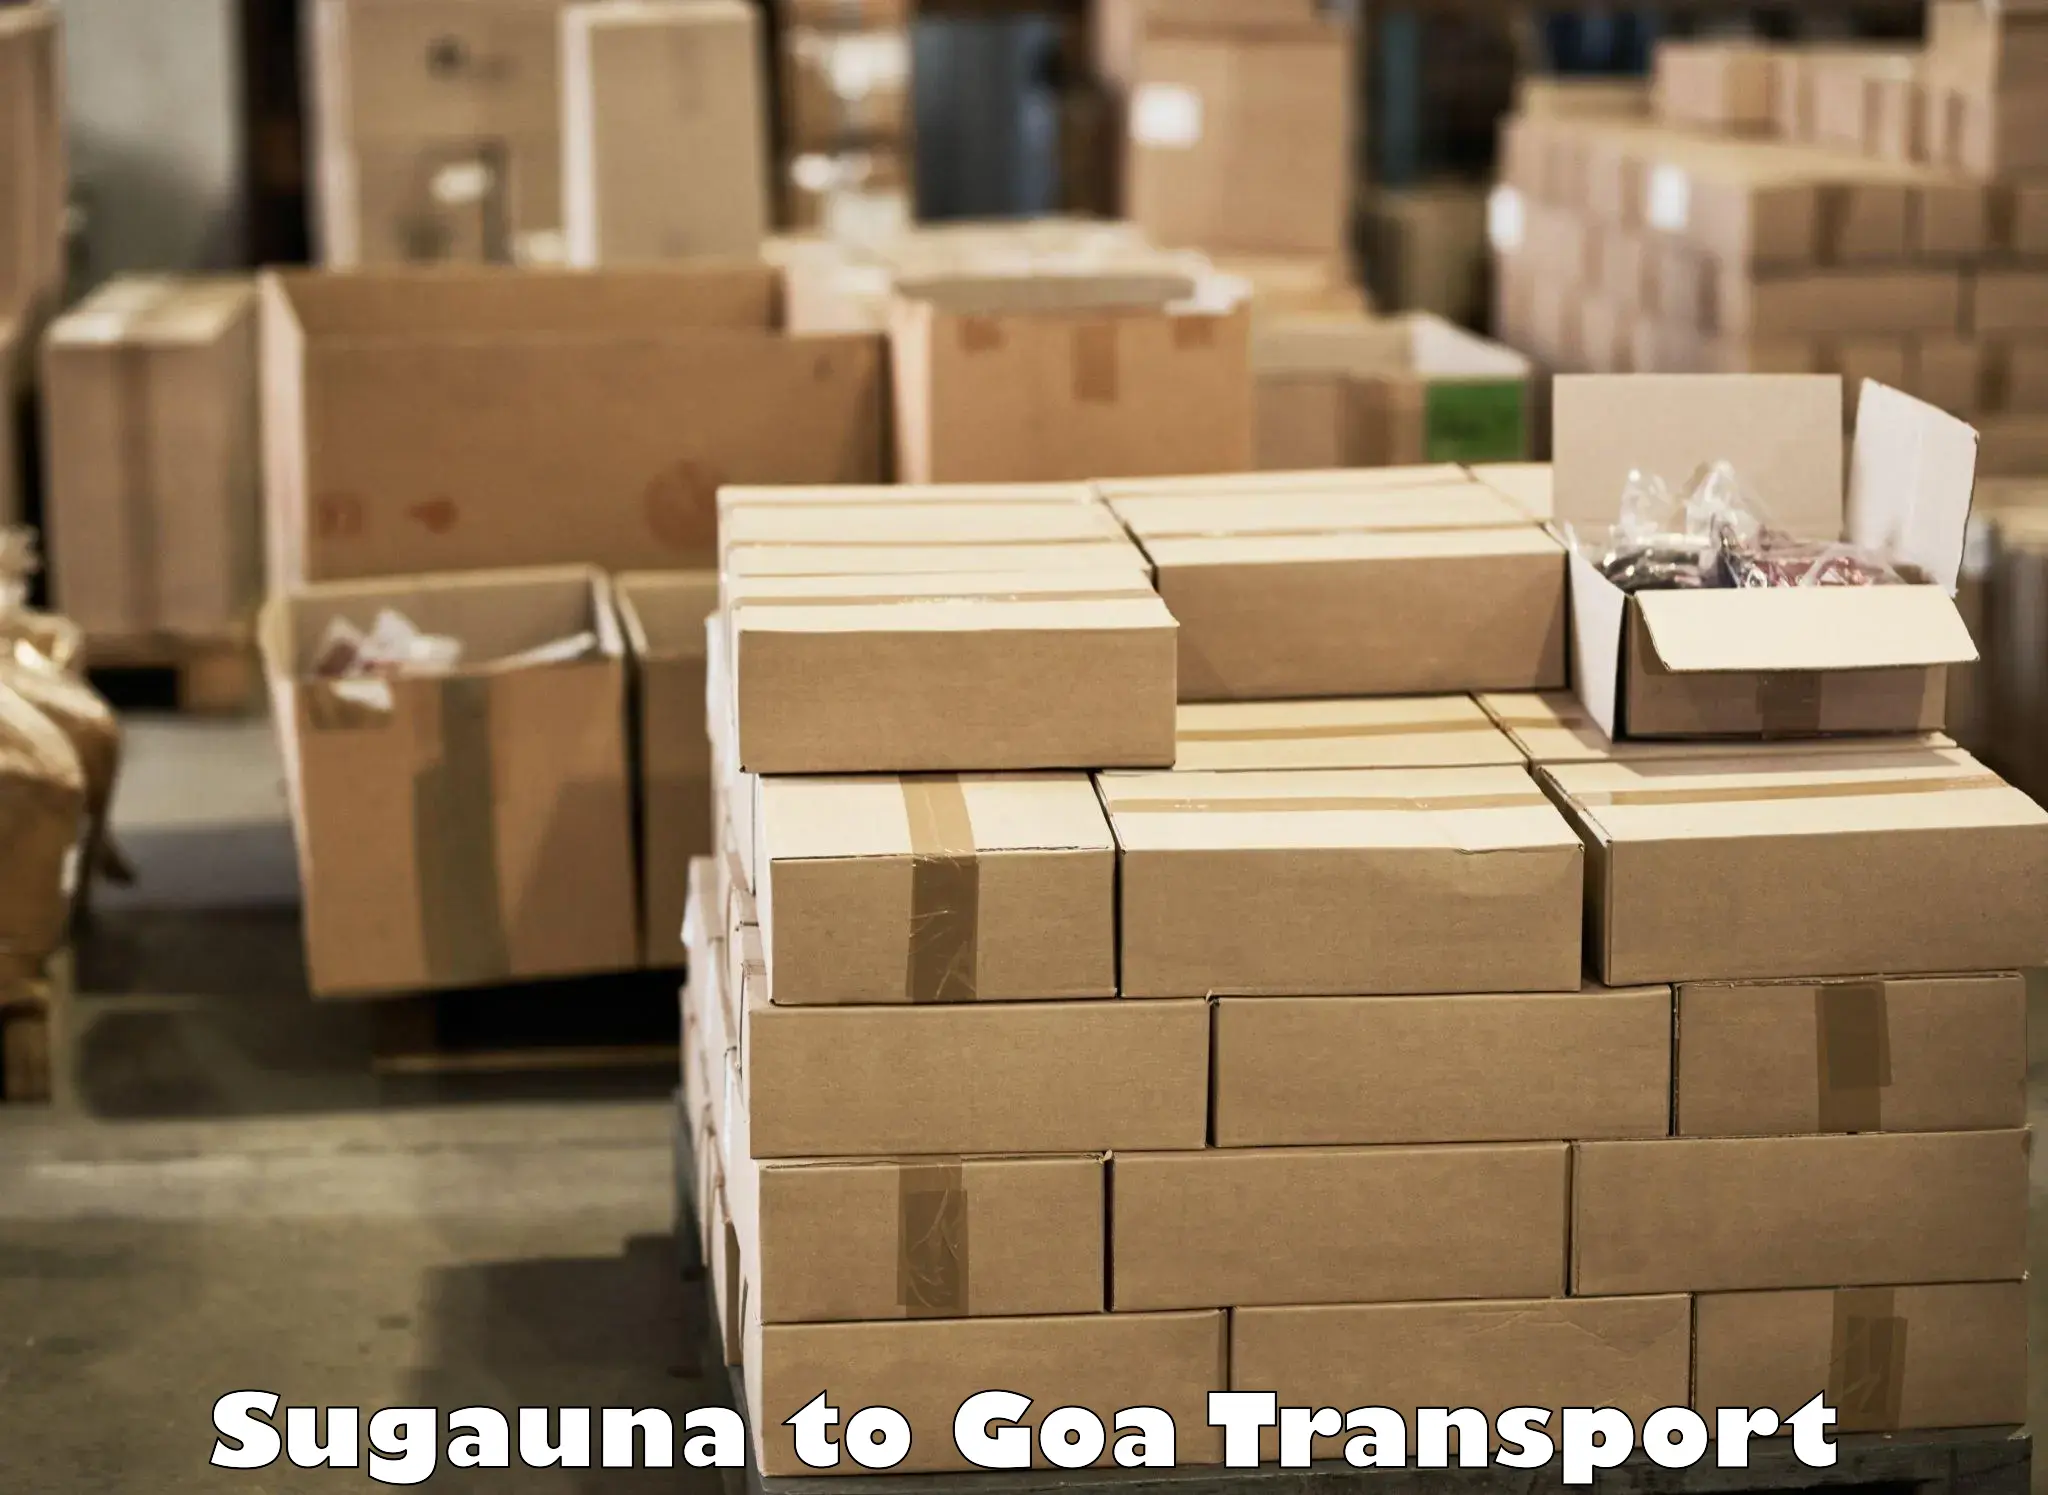 Transport in sharing Sugauna to Goa